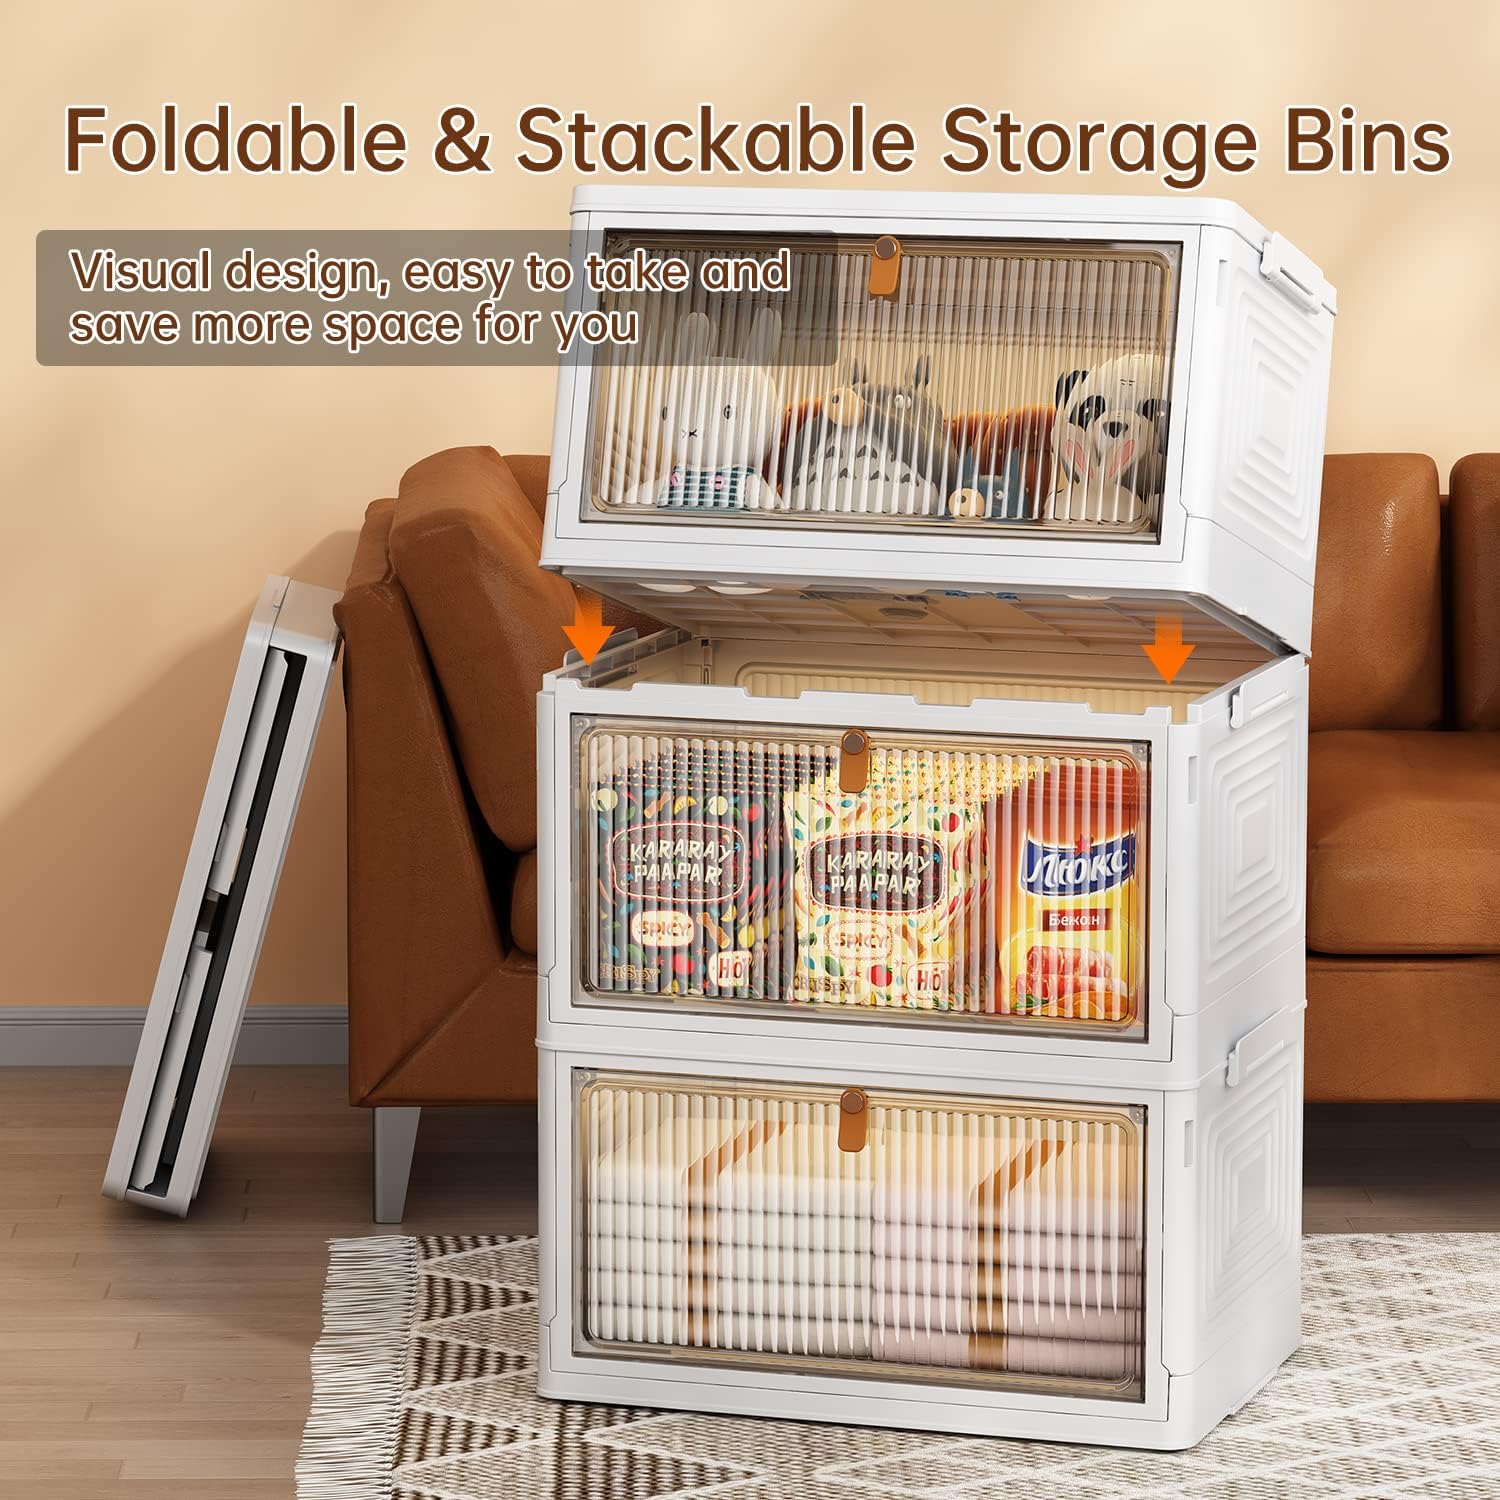 3 Packs Stackable Storage Bins with Wheels